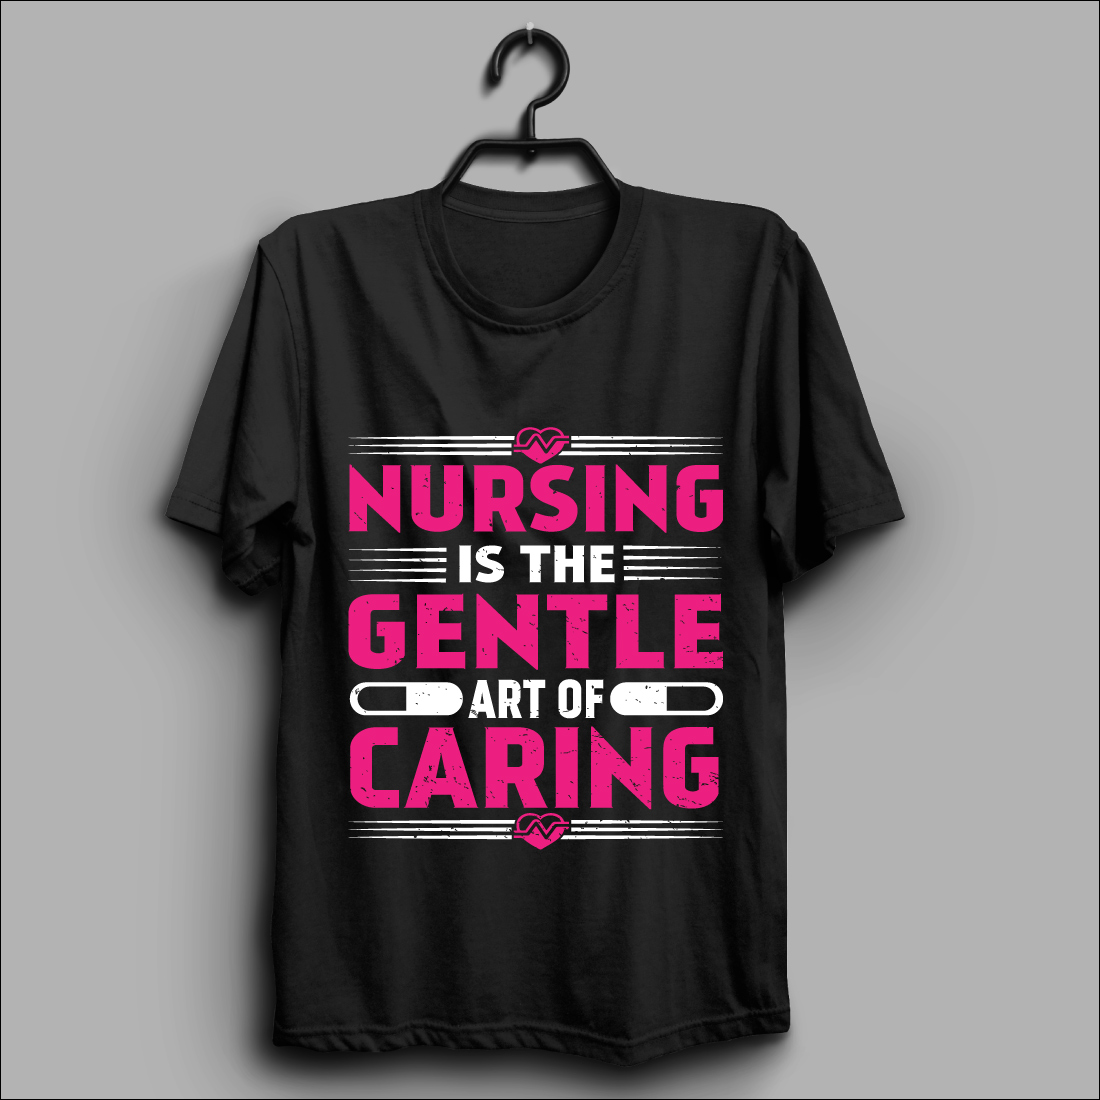 nurse t shirt design5 225